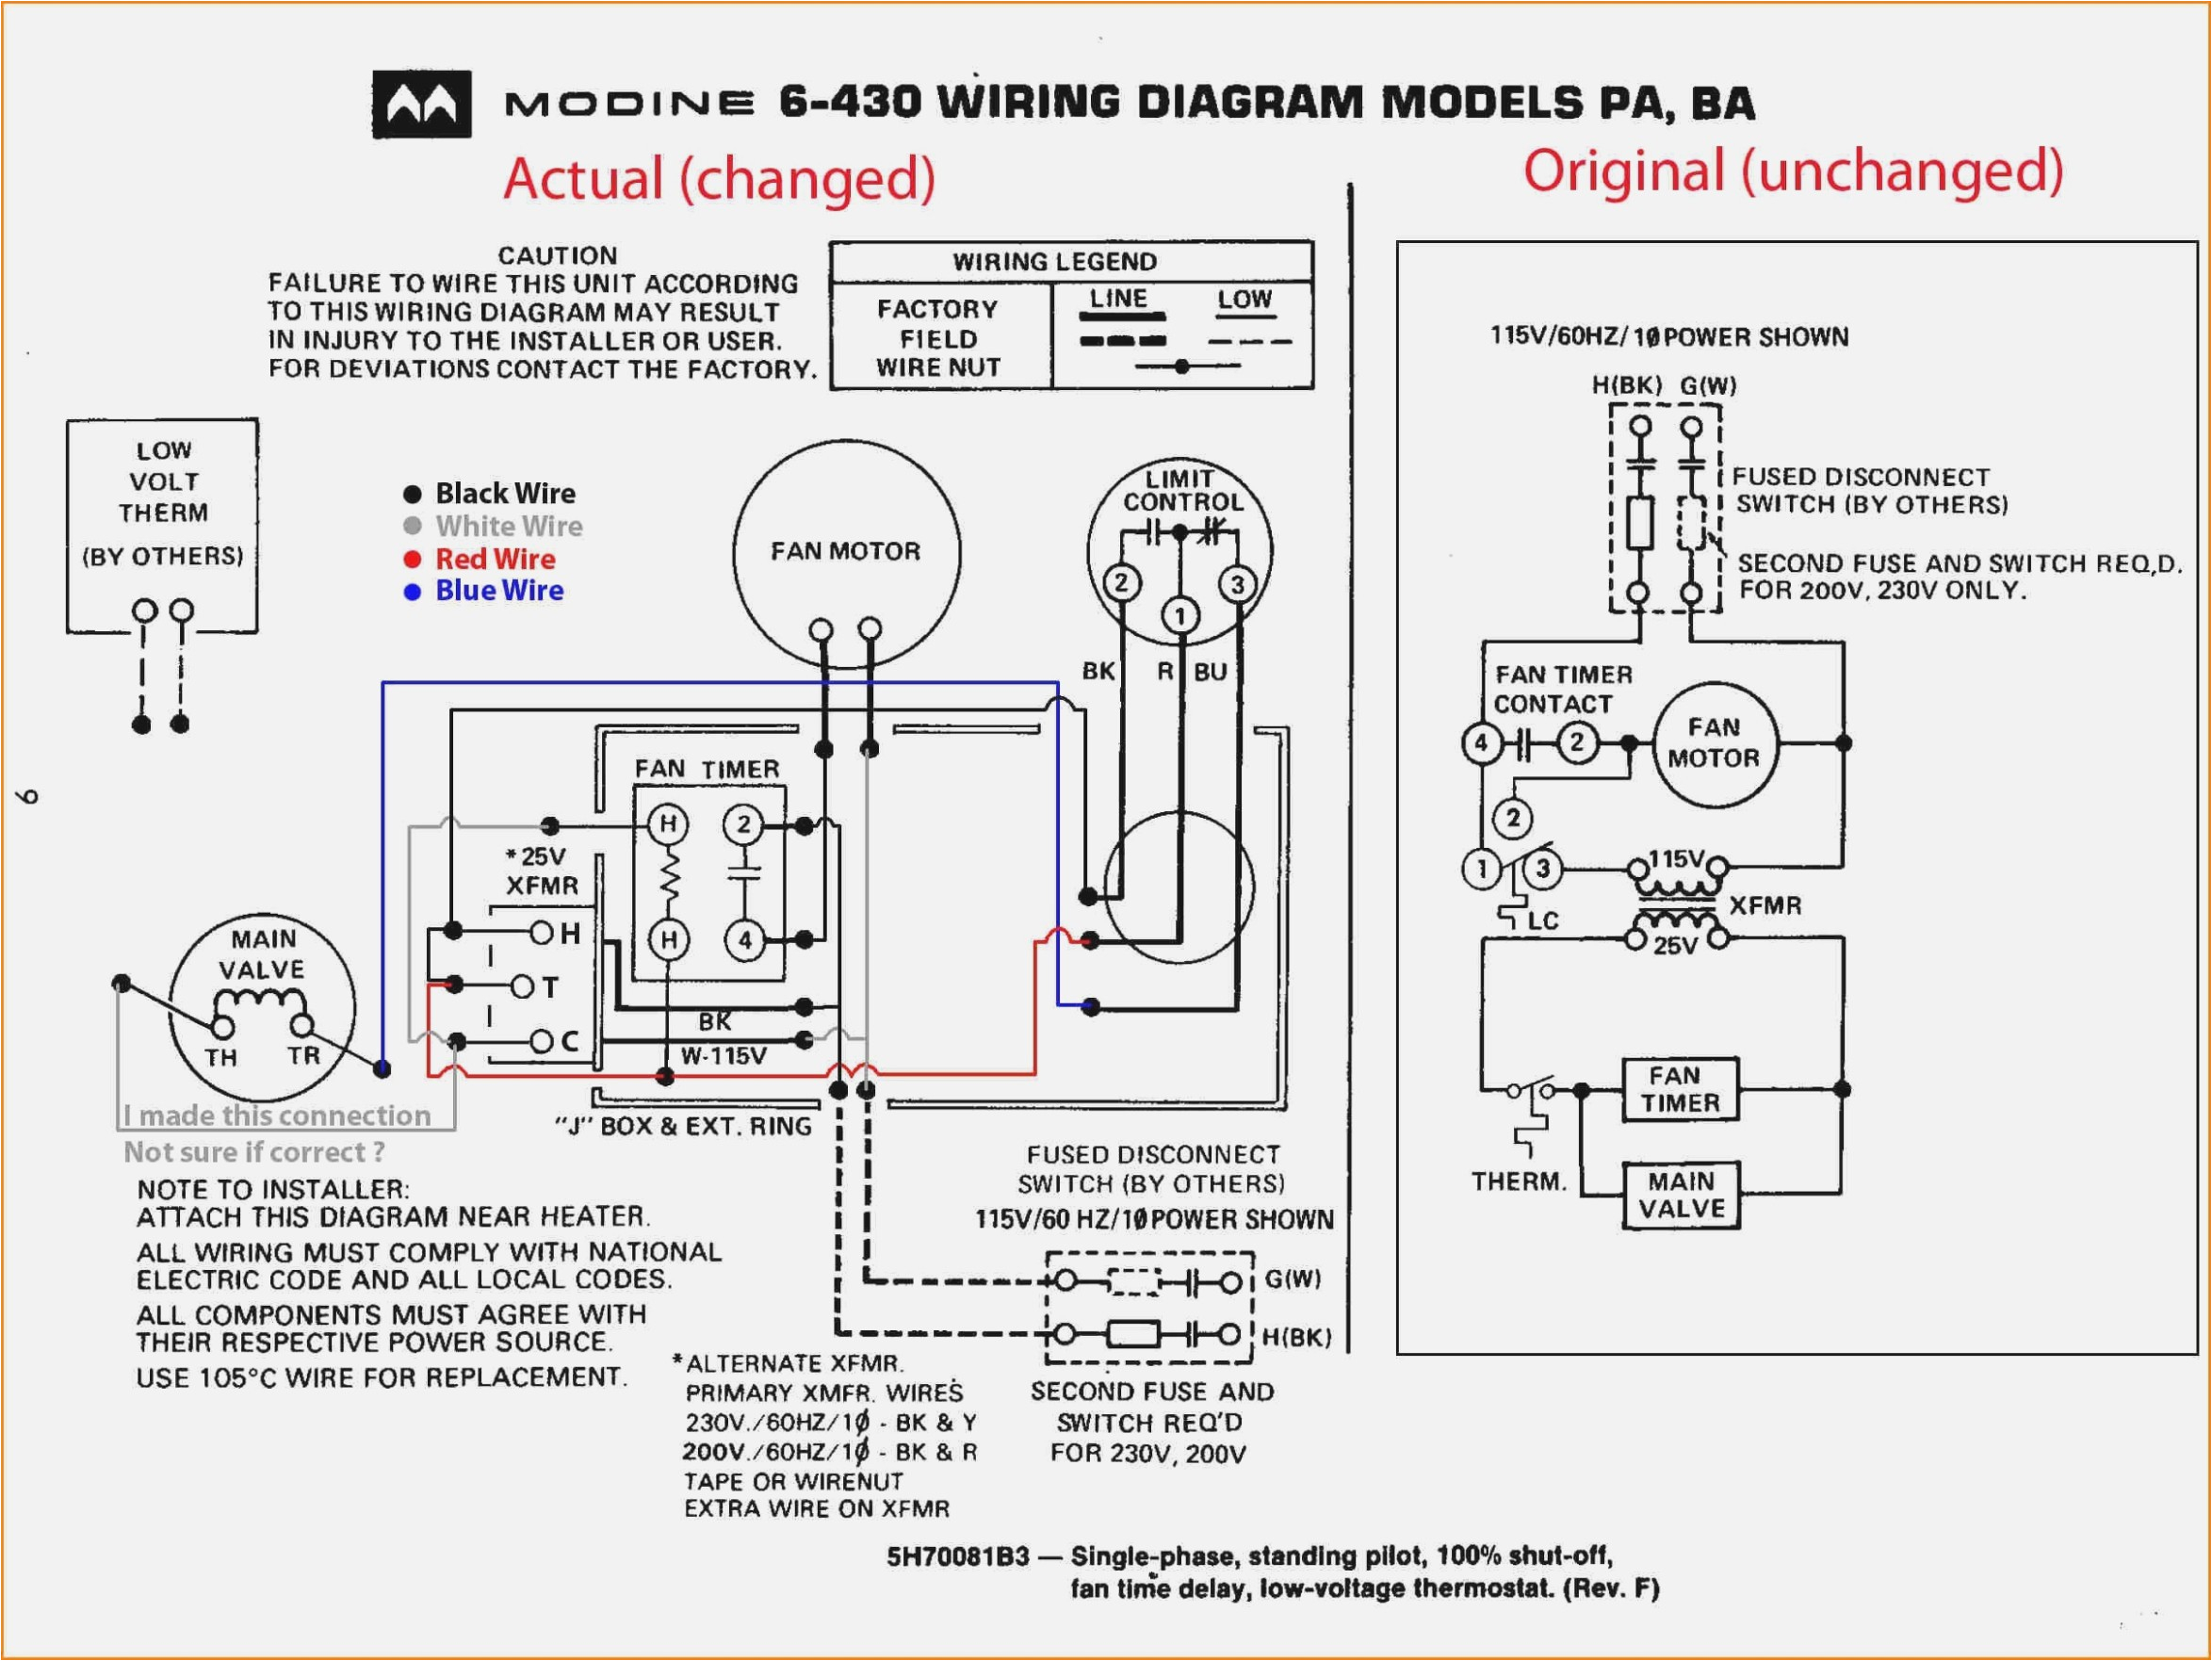 jx56 ge stove wiring diagram wires wiring diagram datasource ge motor wiring diagram wires